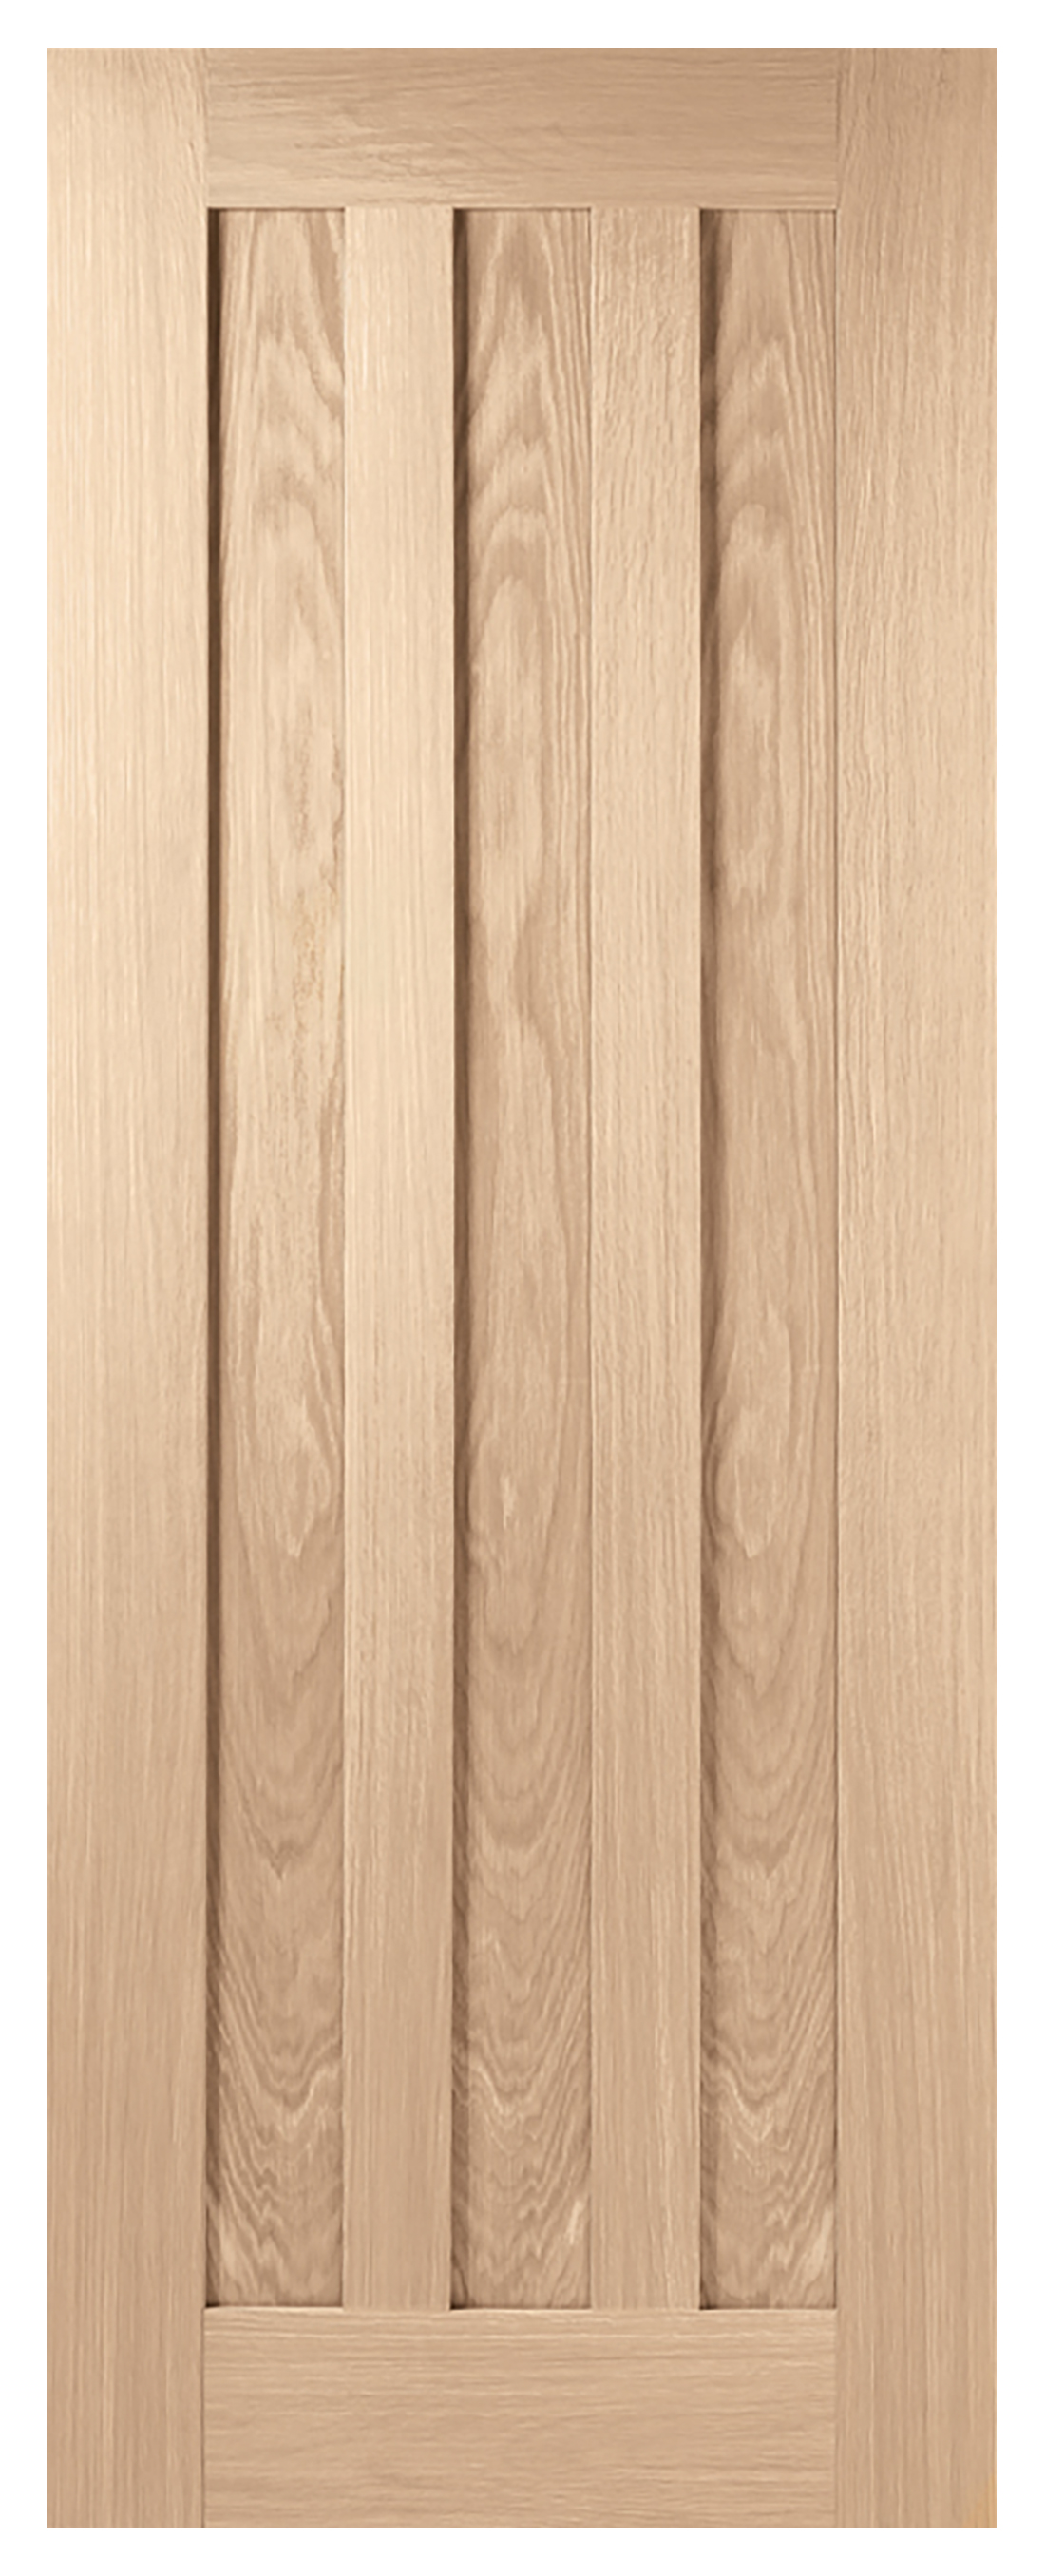 Image of LPD Internal Idaho 3 Panel Pre-Finished Oak Solid Core Door - 726 x 2040mm